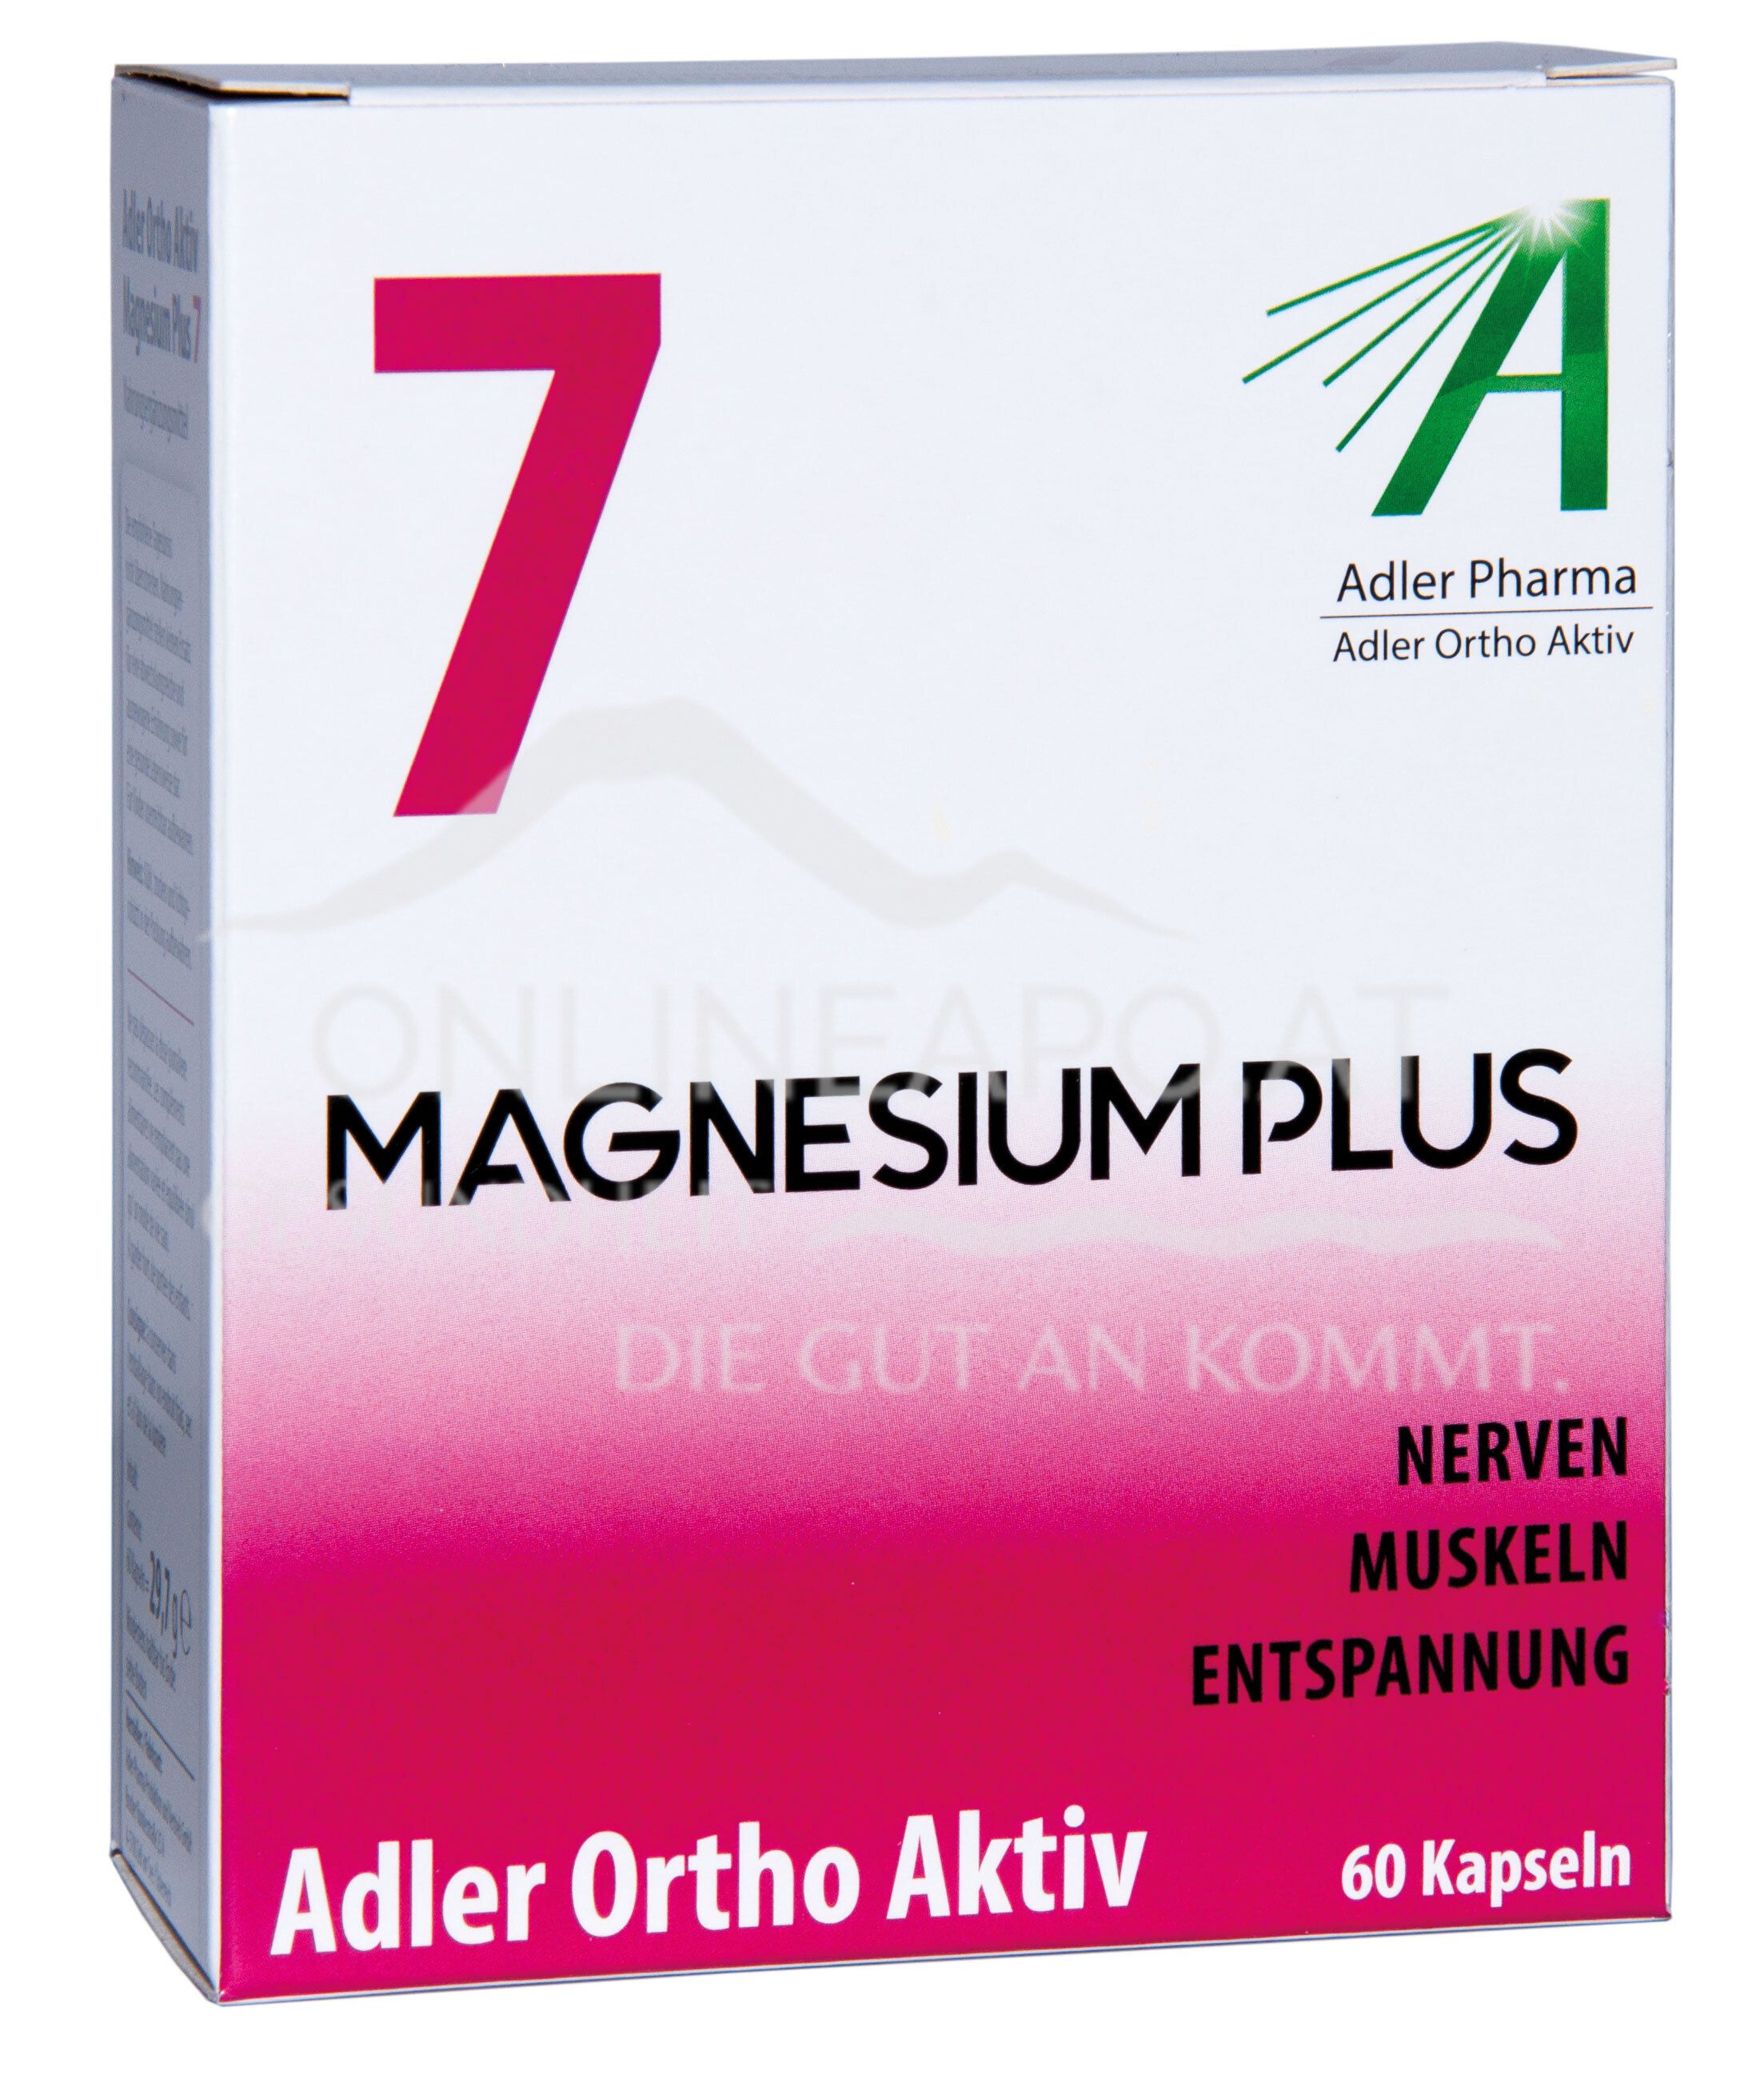 Adler Ortho Aktiv Nr. 7 Magnesium Plus Kapseln